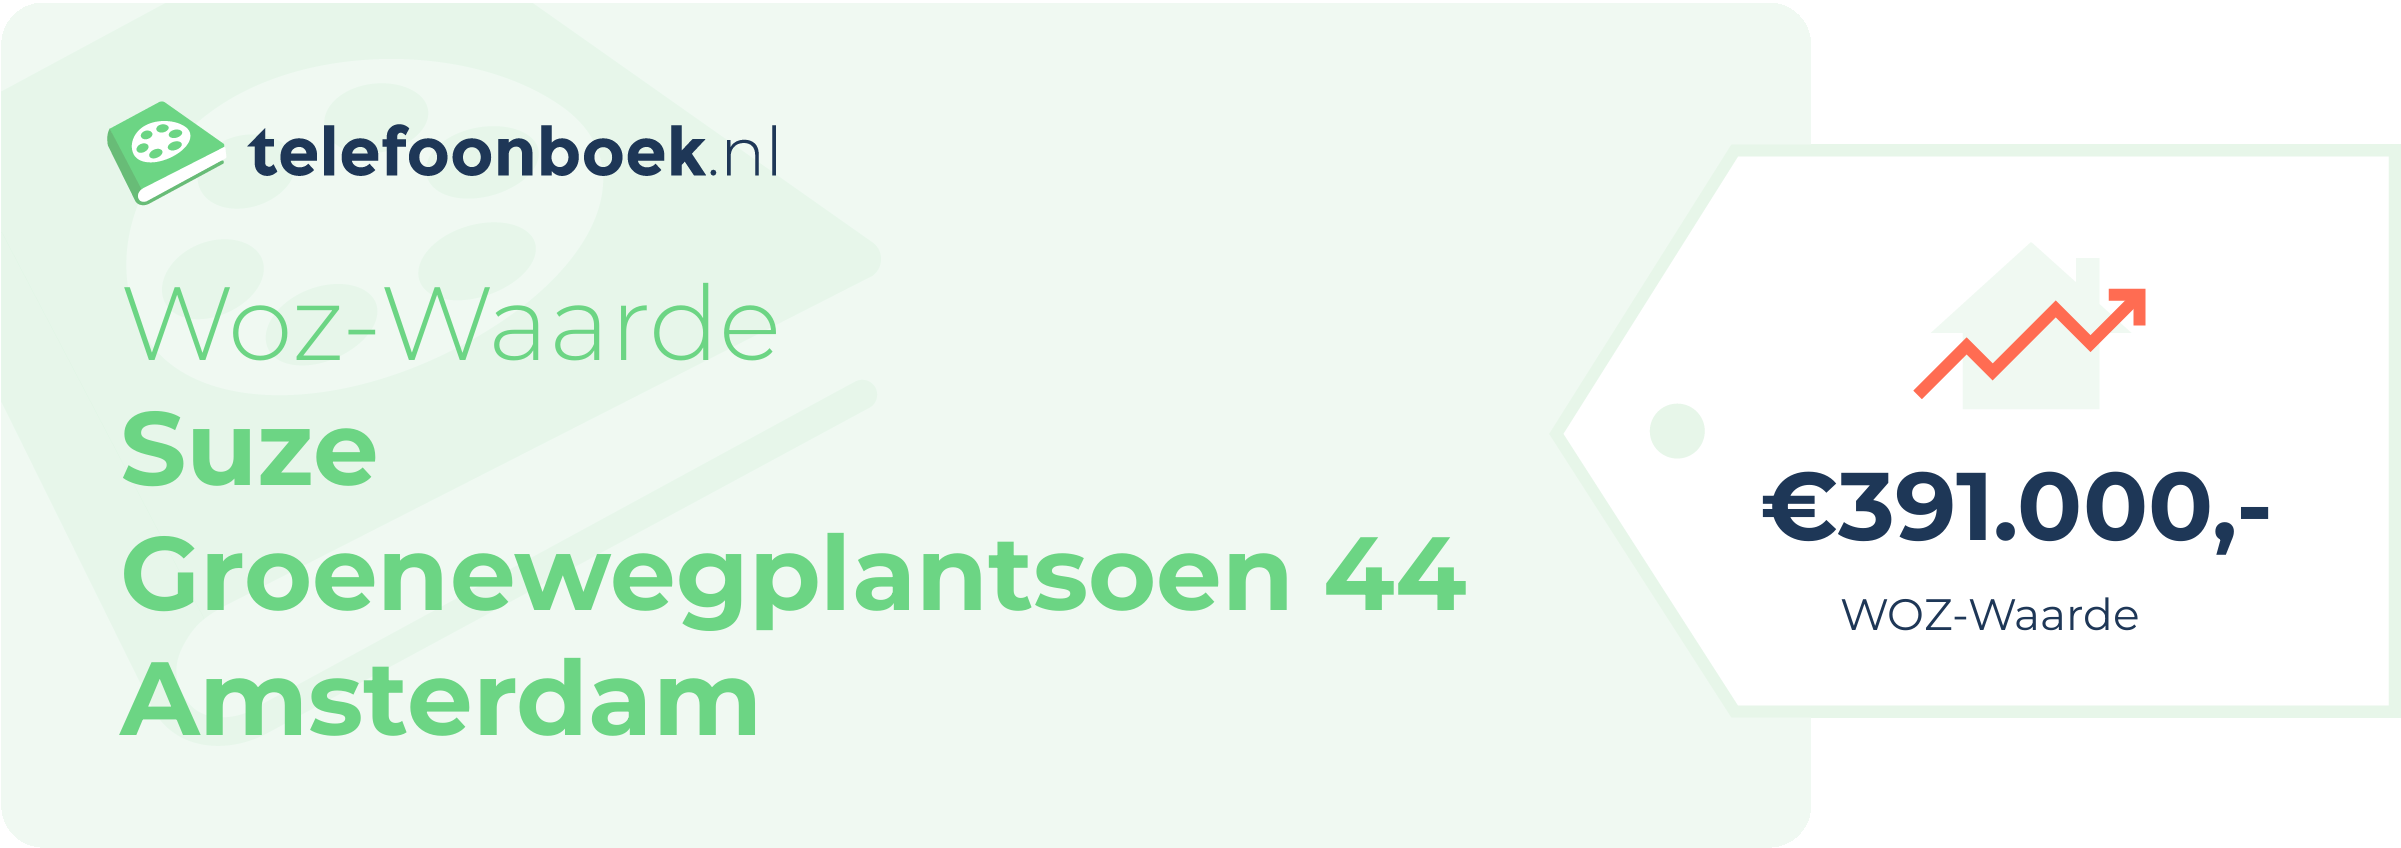 WOZ-waarde Suze Groenewegplantsoen 44 Amsterdam